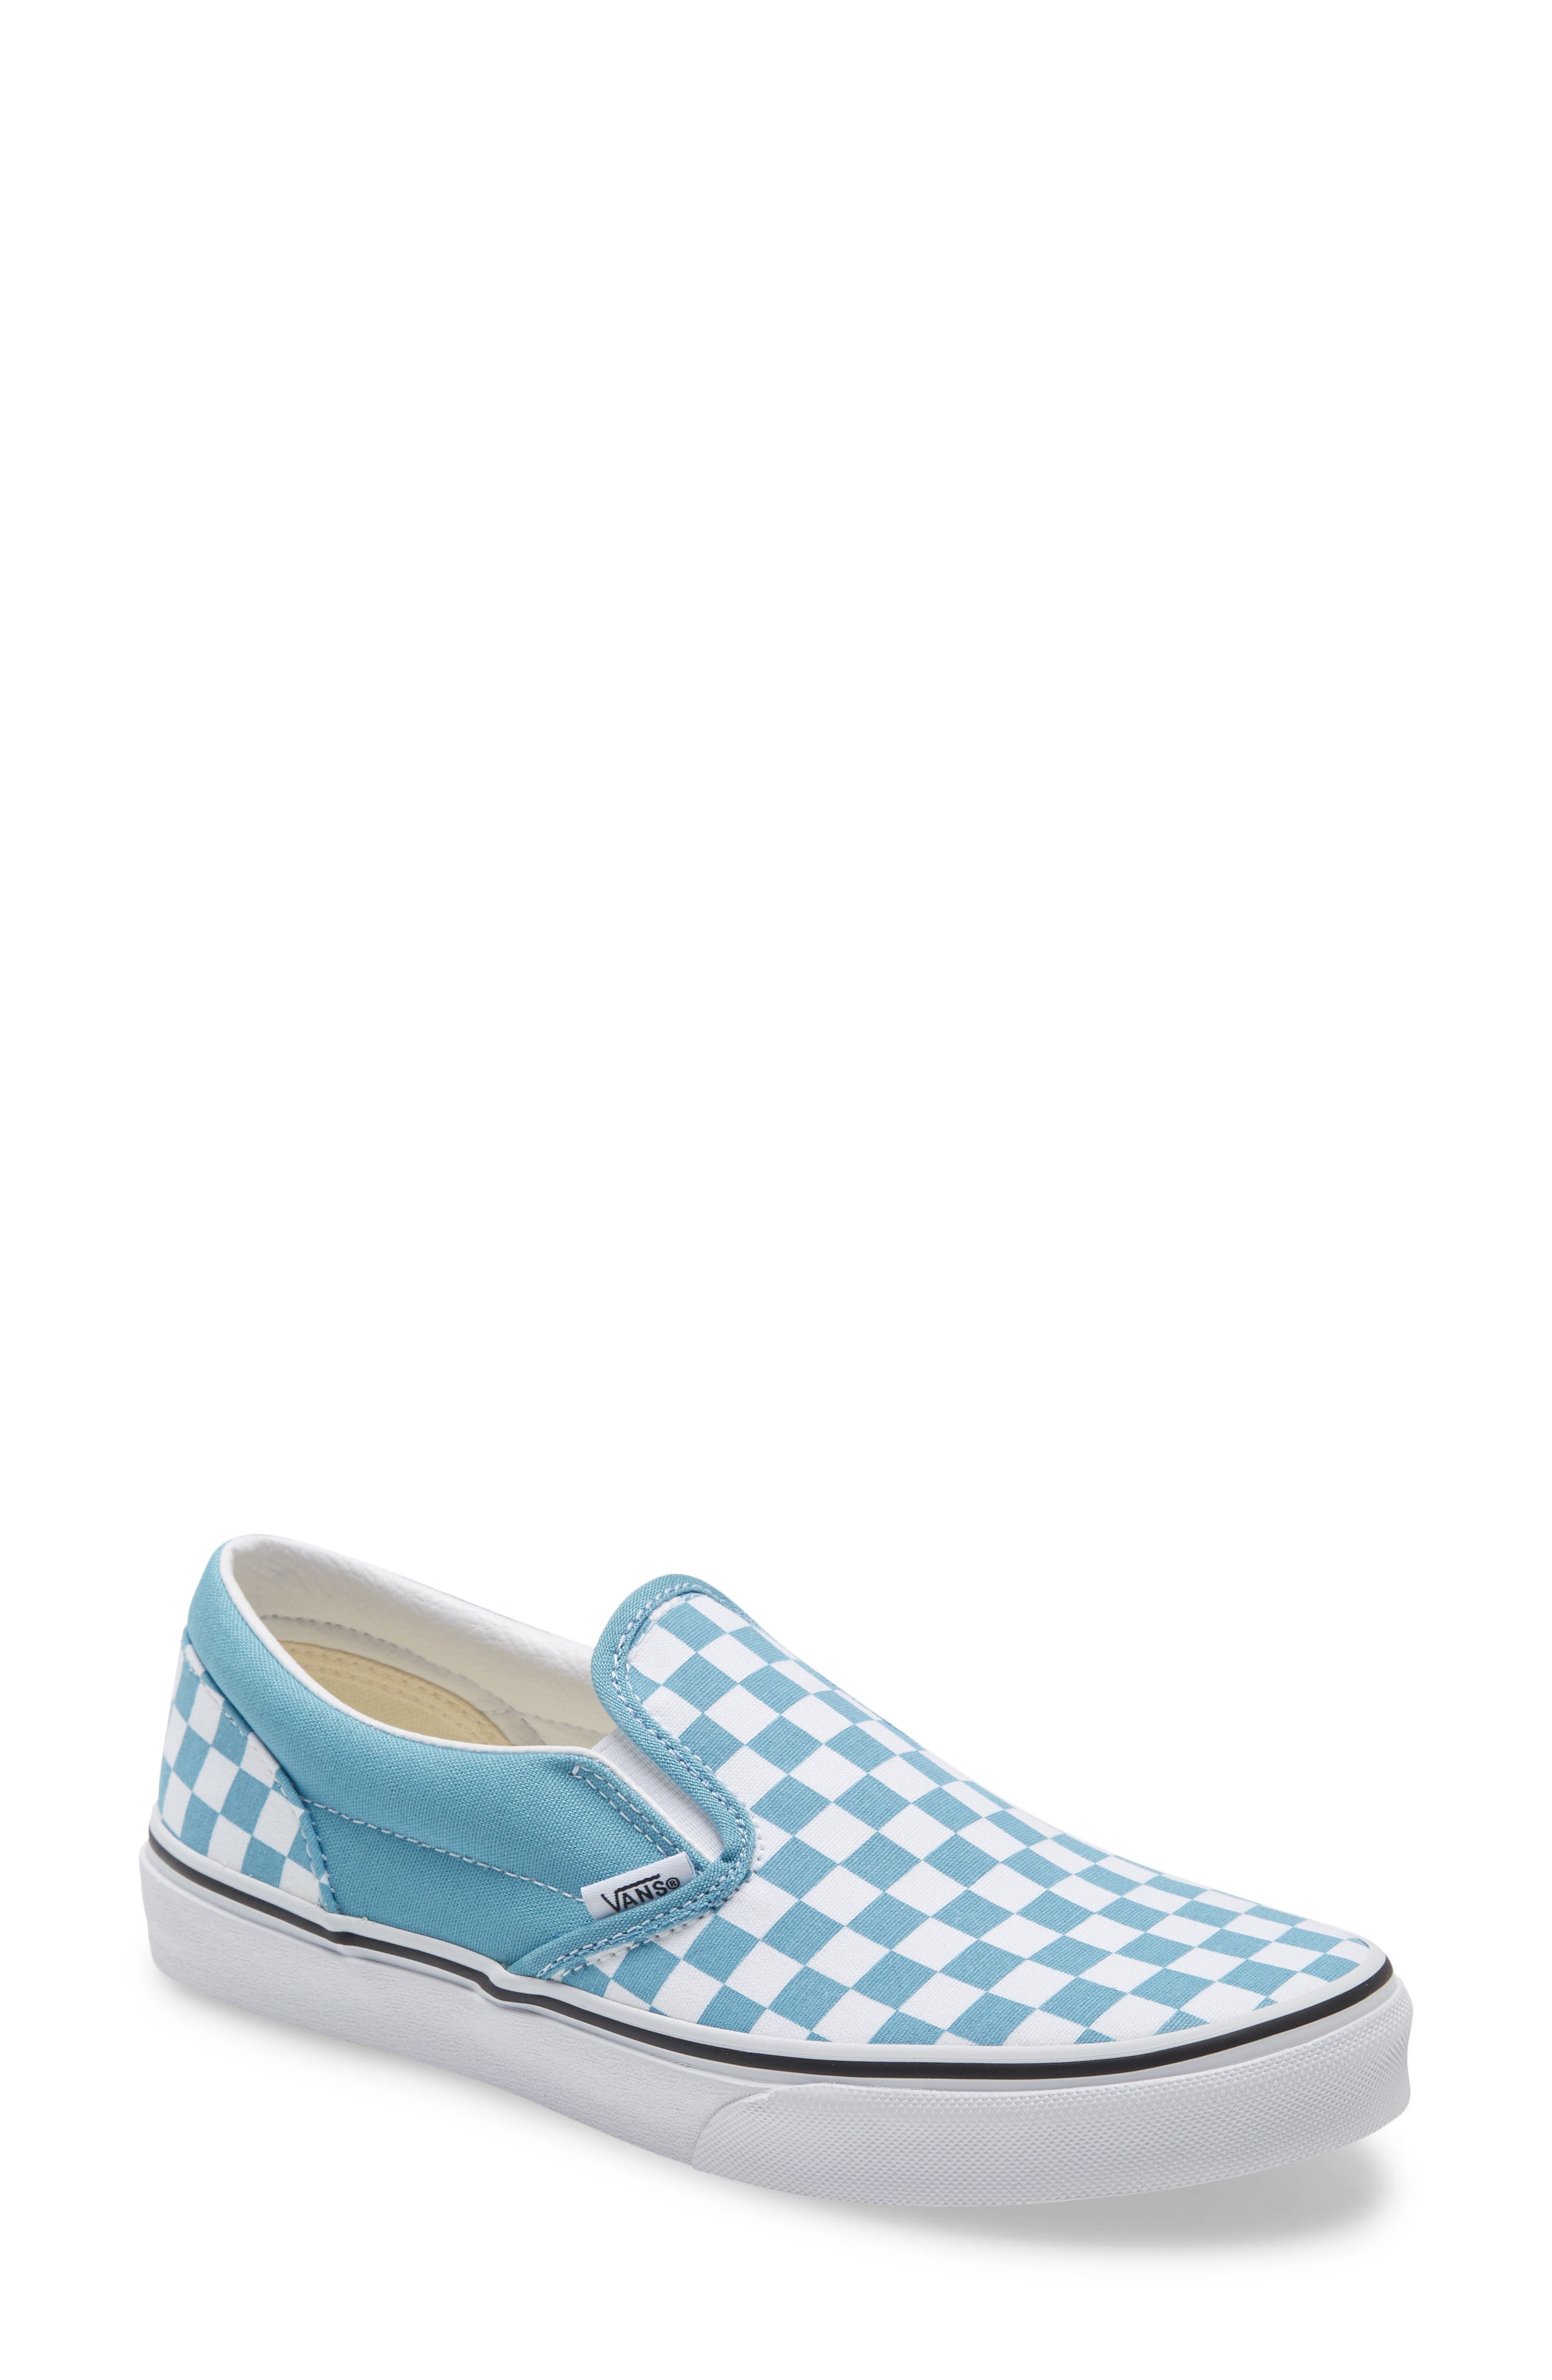 vans shoes for girls blue